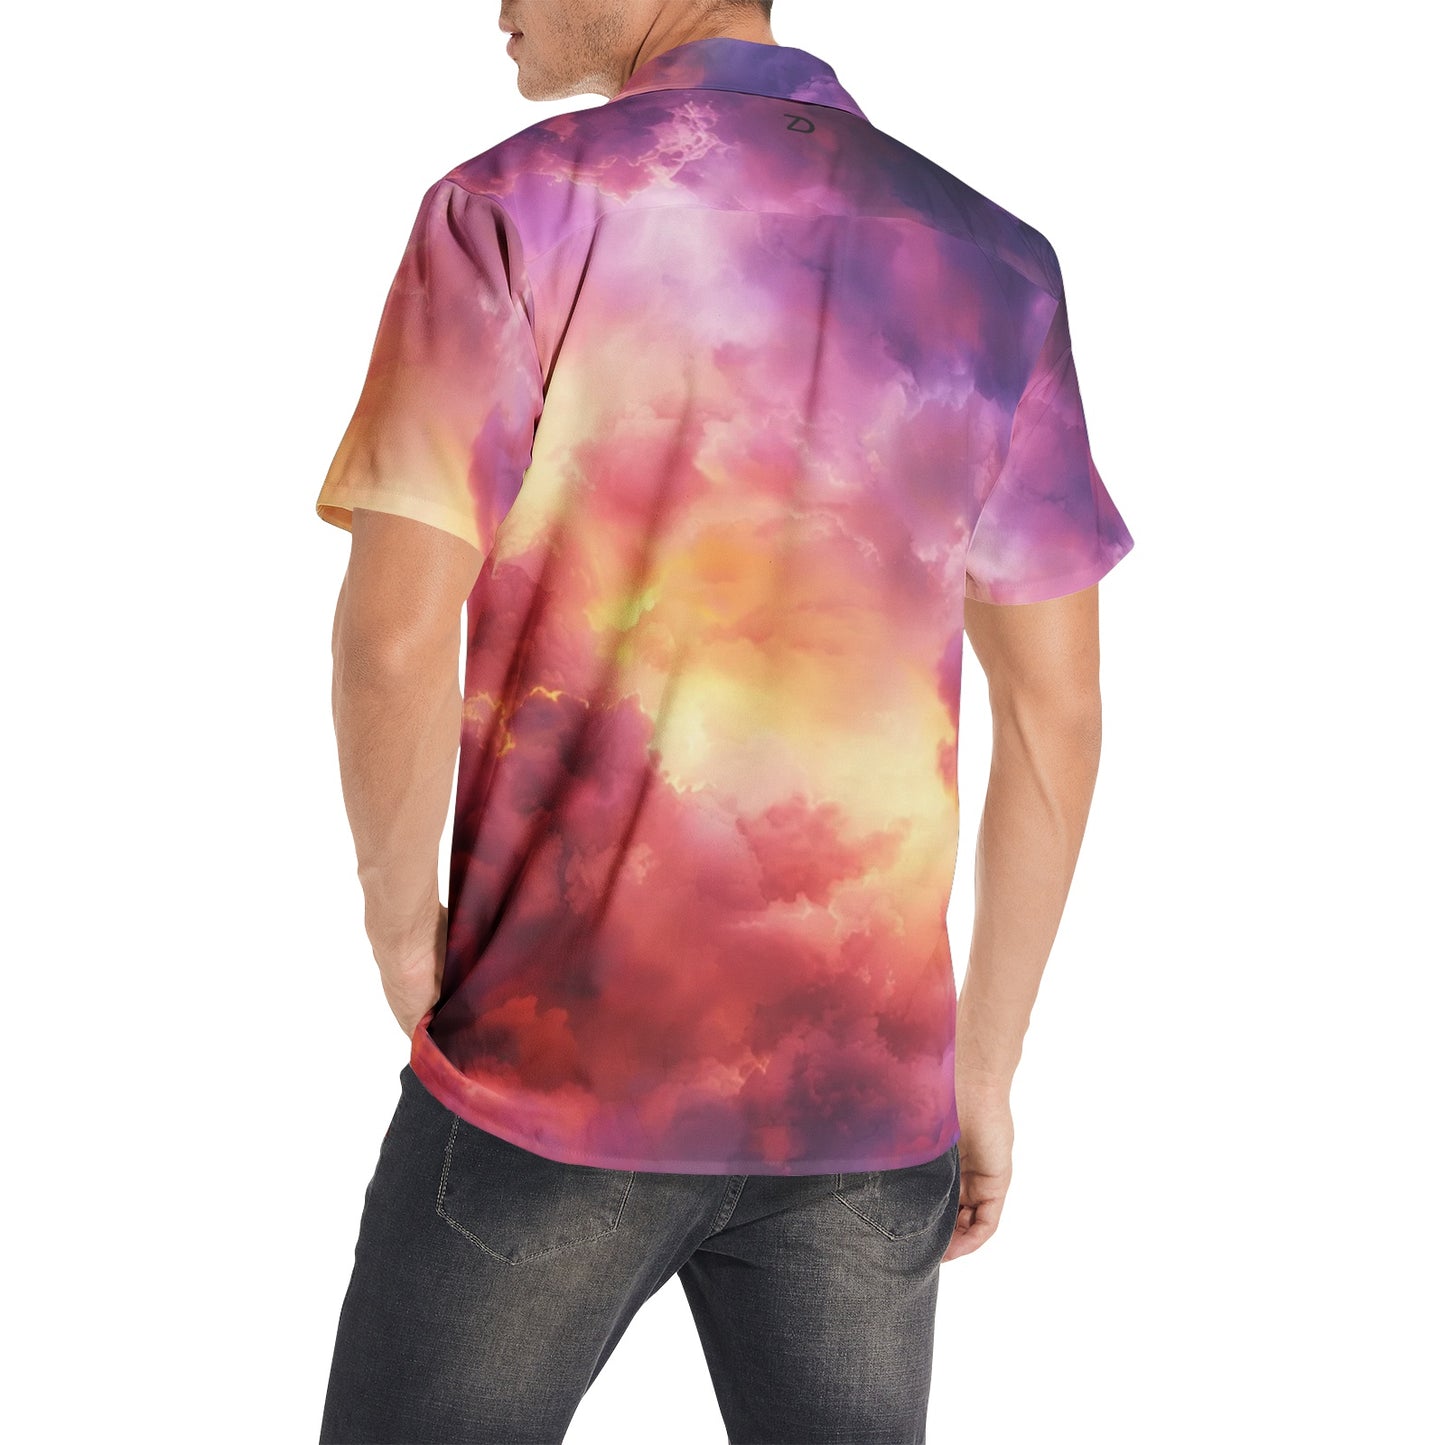 Neduz Elements Zephyr Pink Clouds Men's All-over print Short Sleeve Shirts